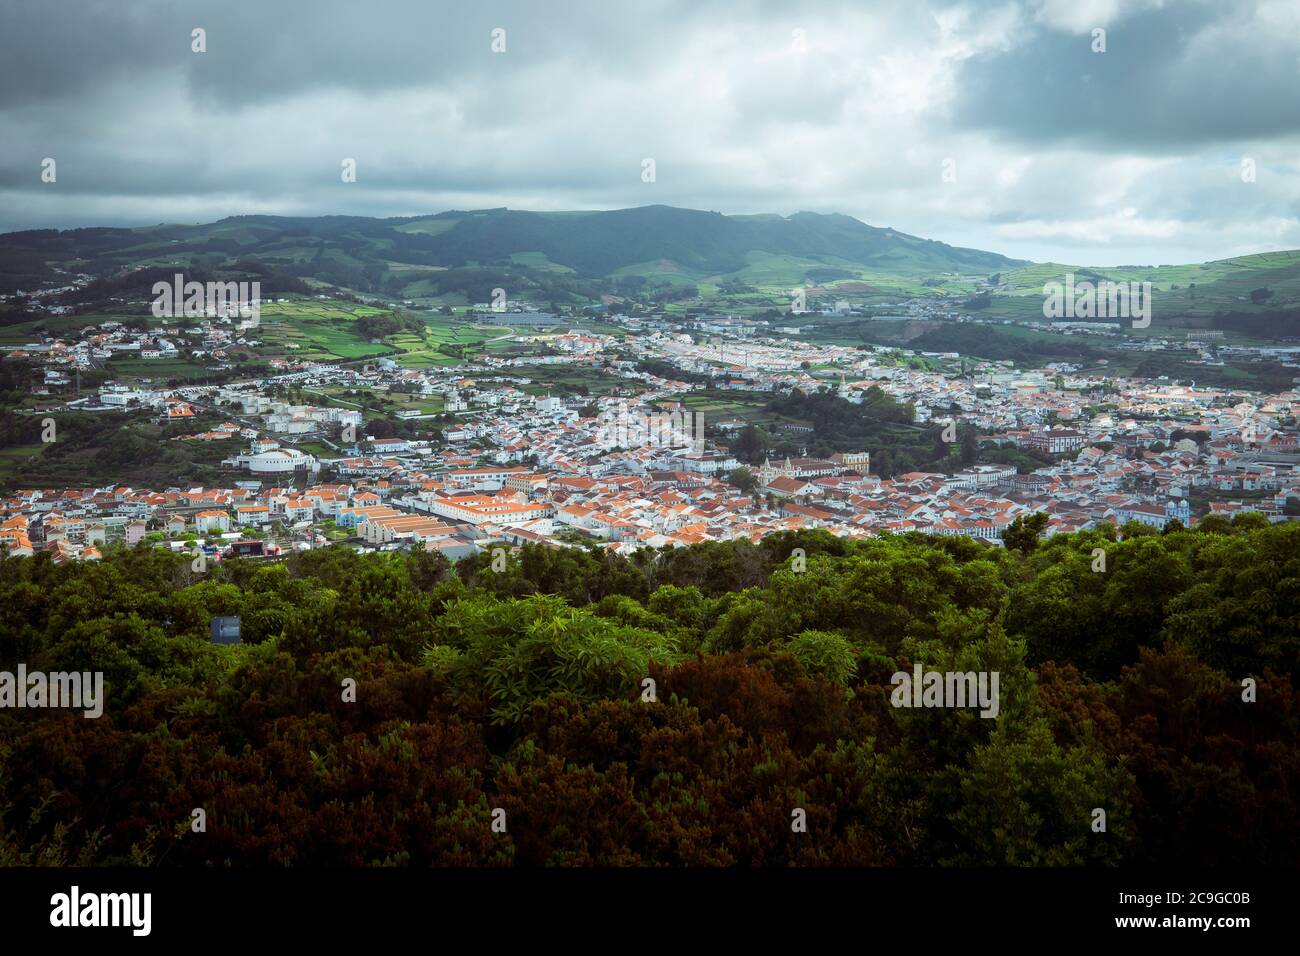 Panorama de la ville d'Angra do Heroismo (Angra do Heroísmo) dans l'île de Terceira, Açores, Portugal Banque D'Images